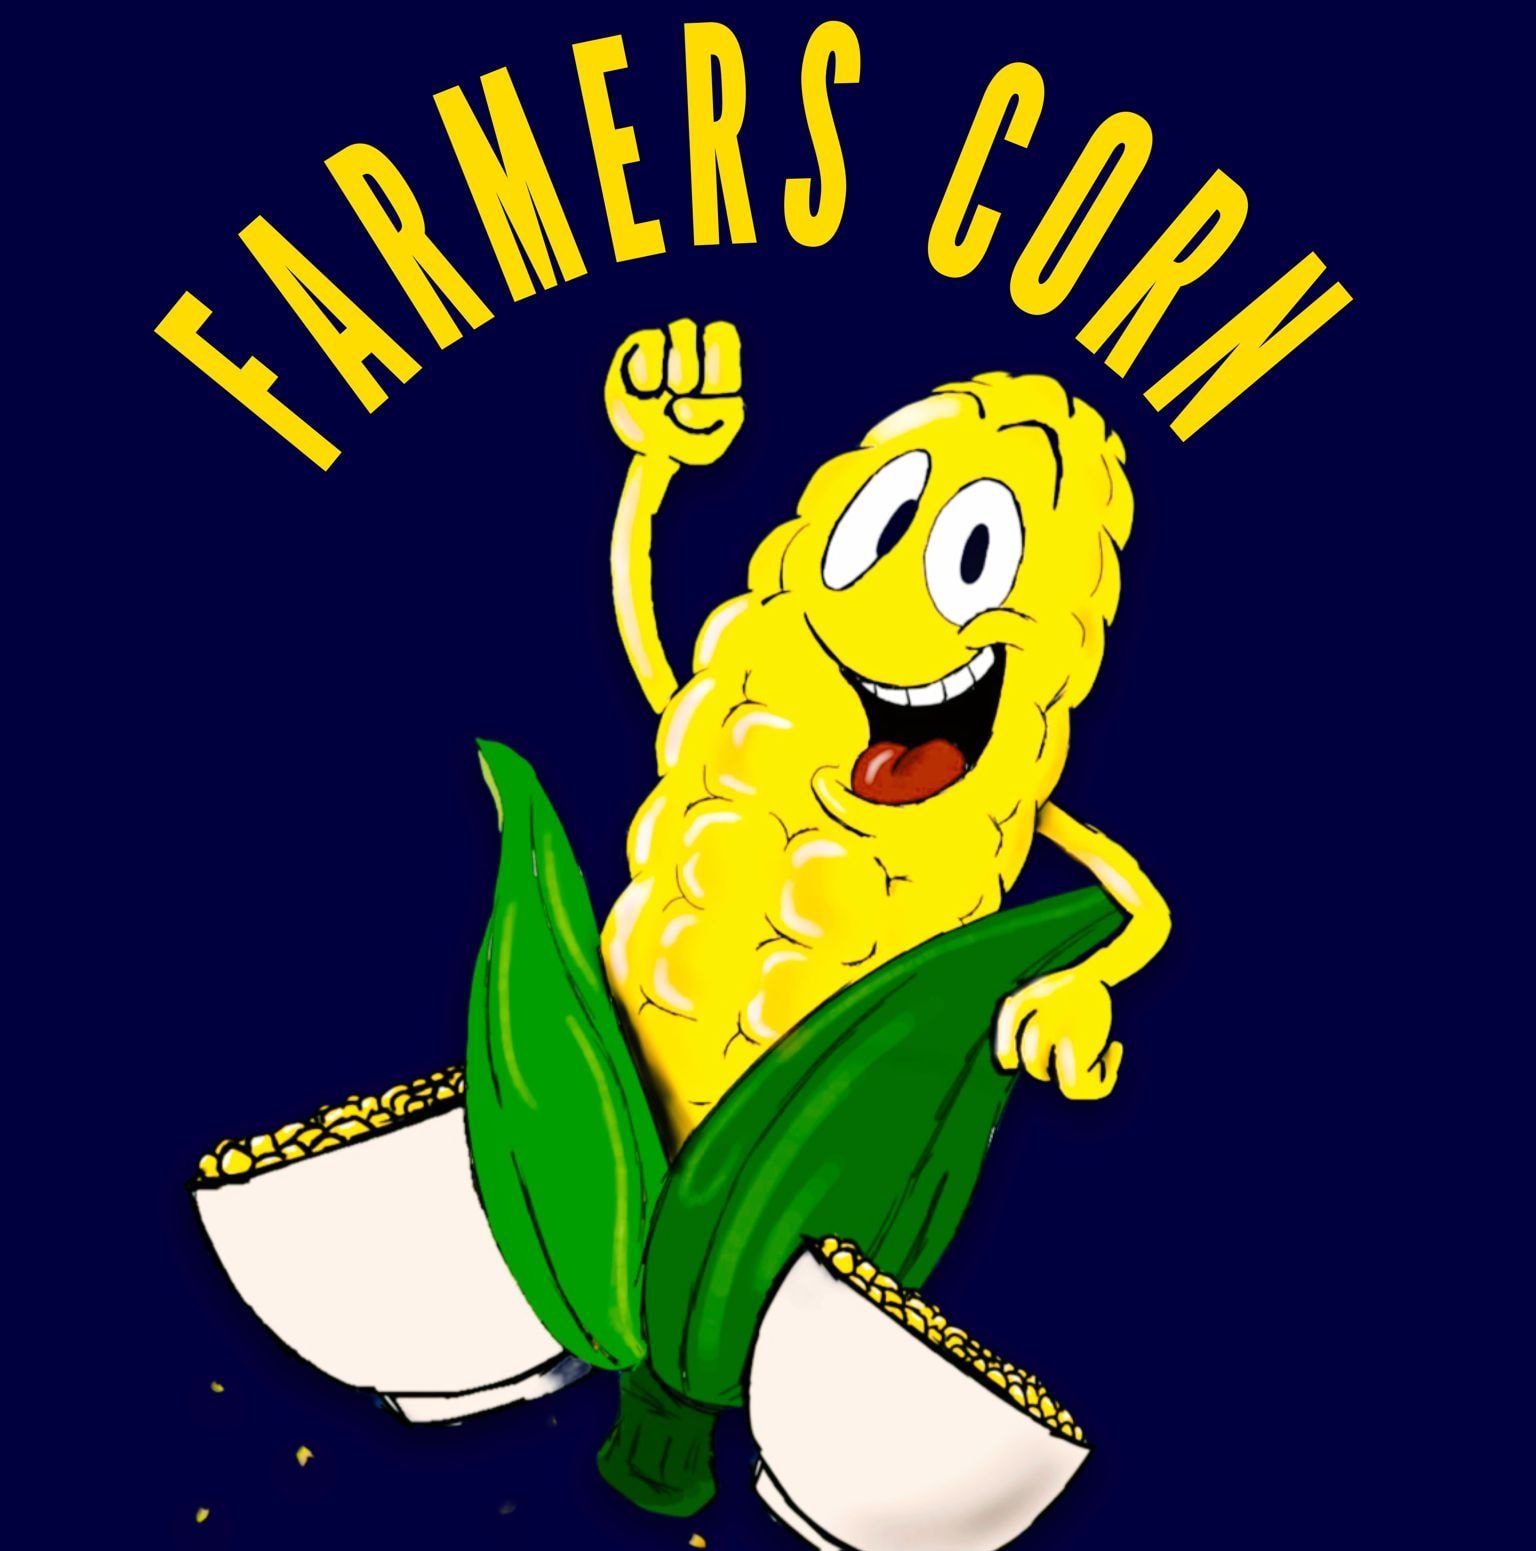 Farmer's Corn Food Vendor